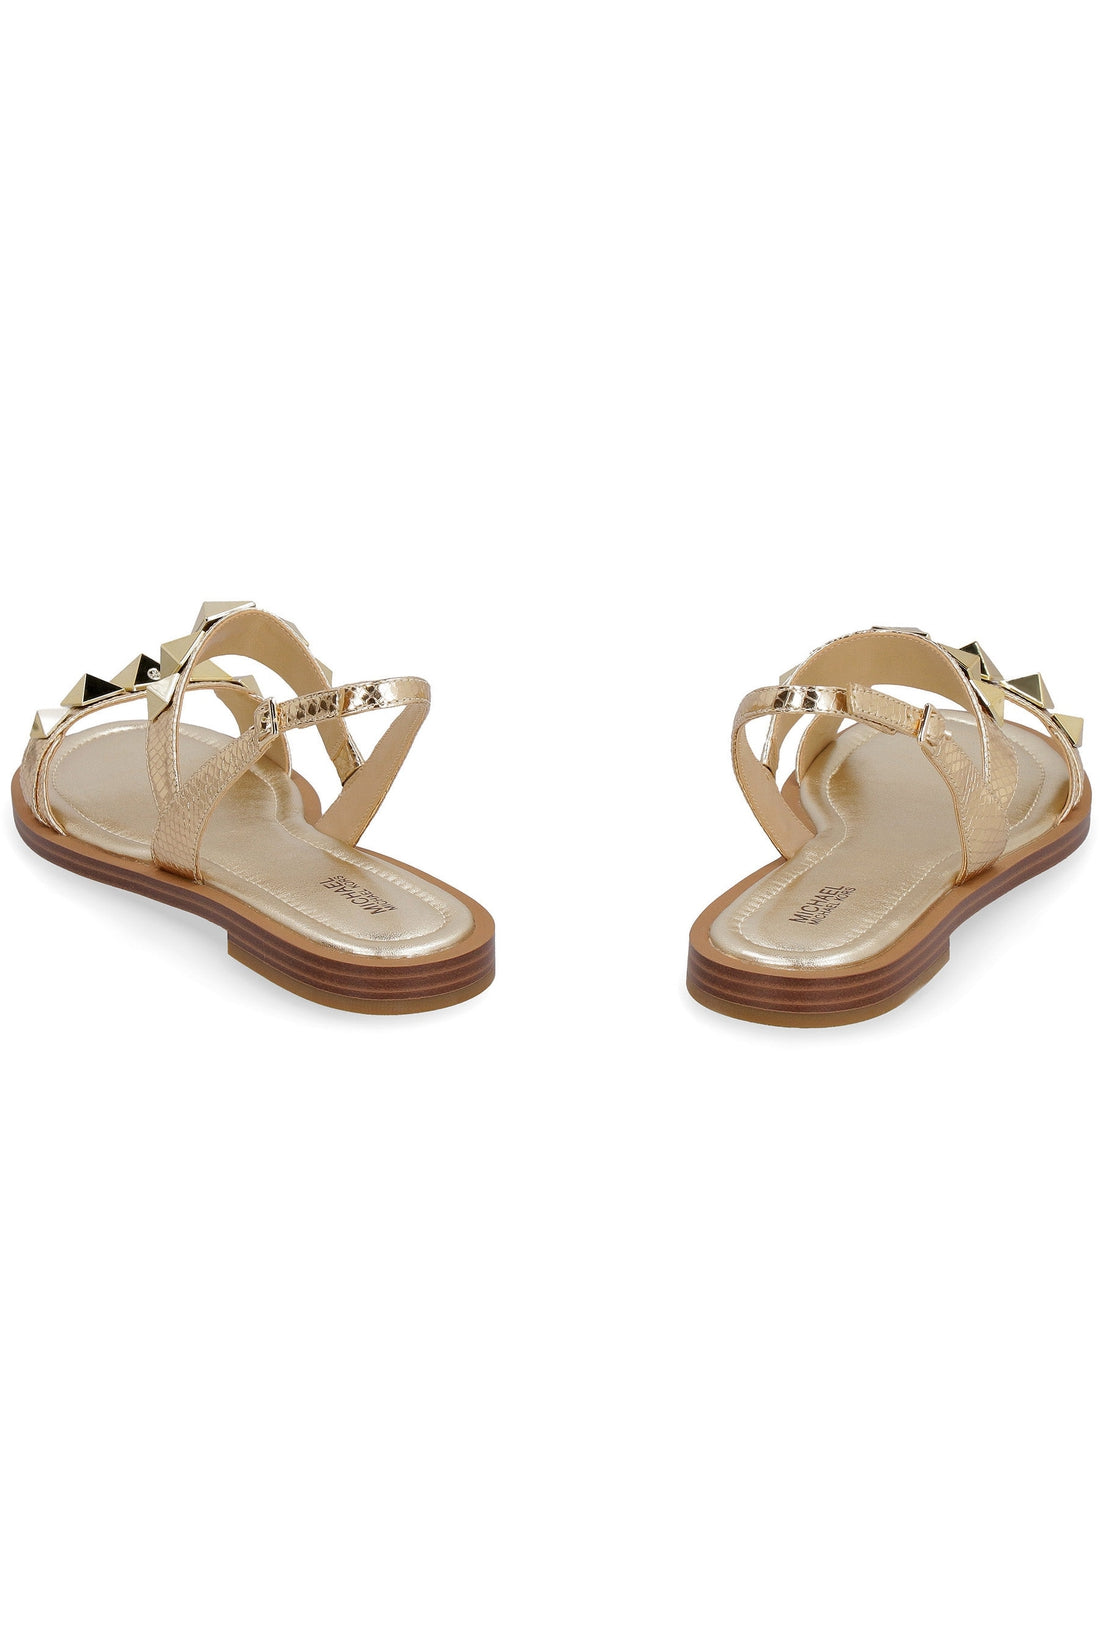 MICHAEL MICHAEL KORS-OUTLET-SALE-Wren metallic leather flat slippers-ARCHIVIST